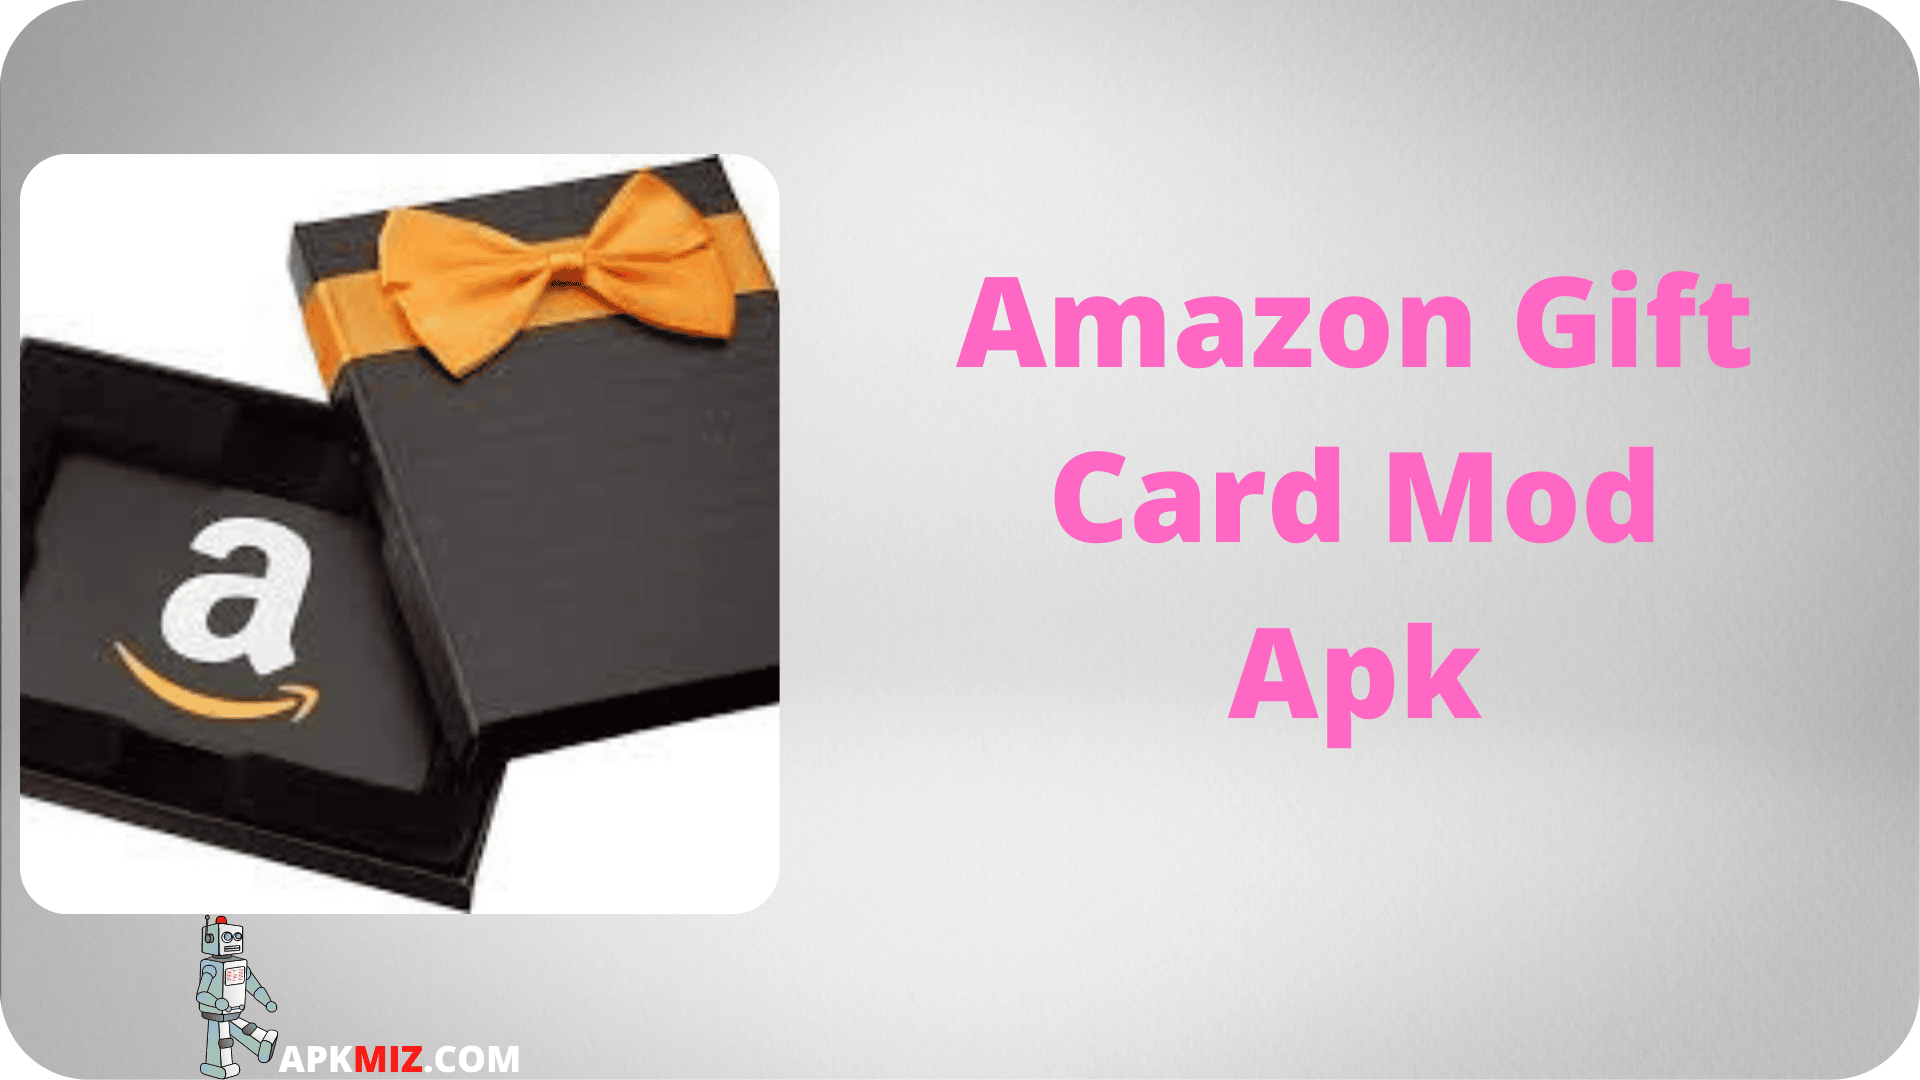 Amazon Gift Card Mod Apk